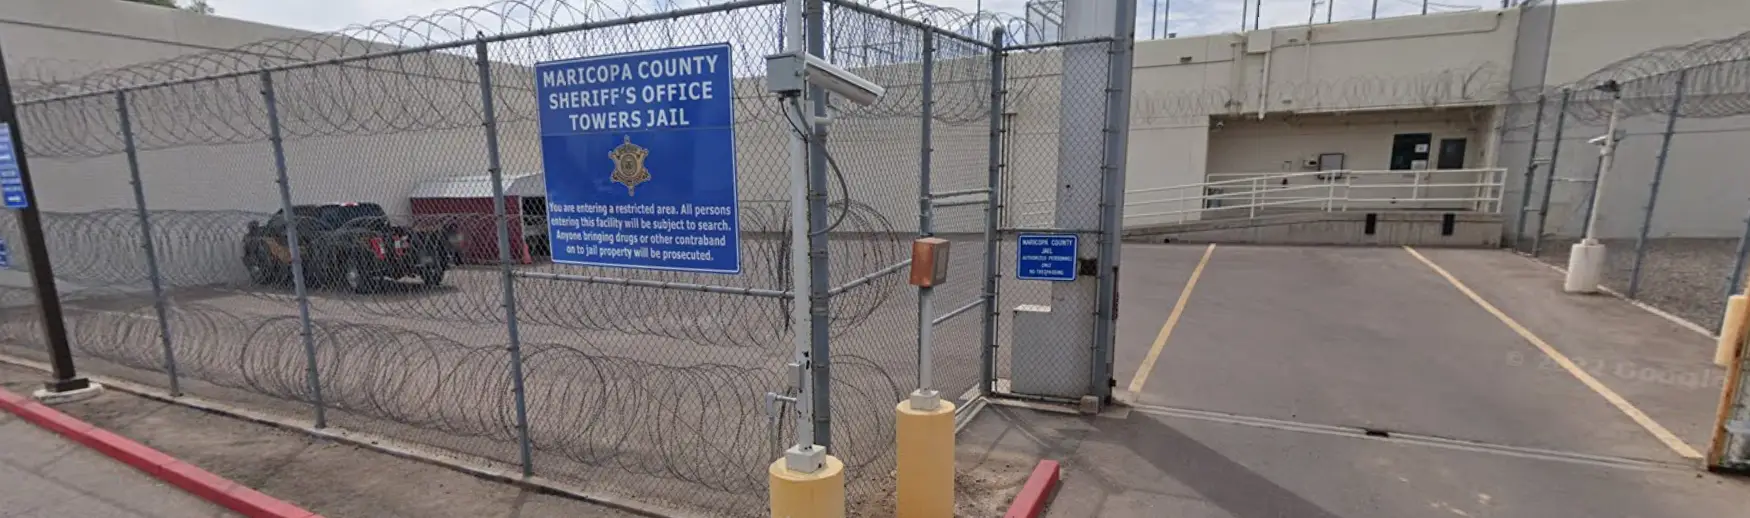 Photos Maricopa County Towers Jail 3